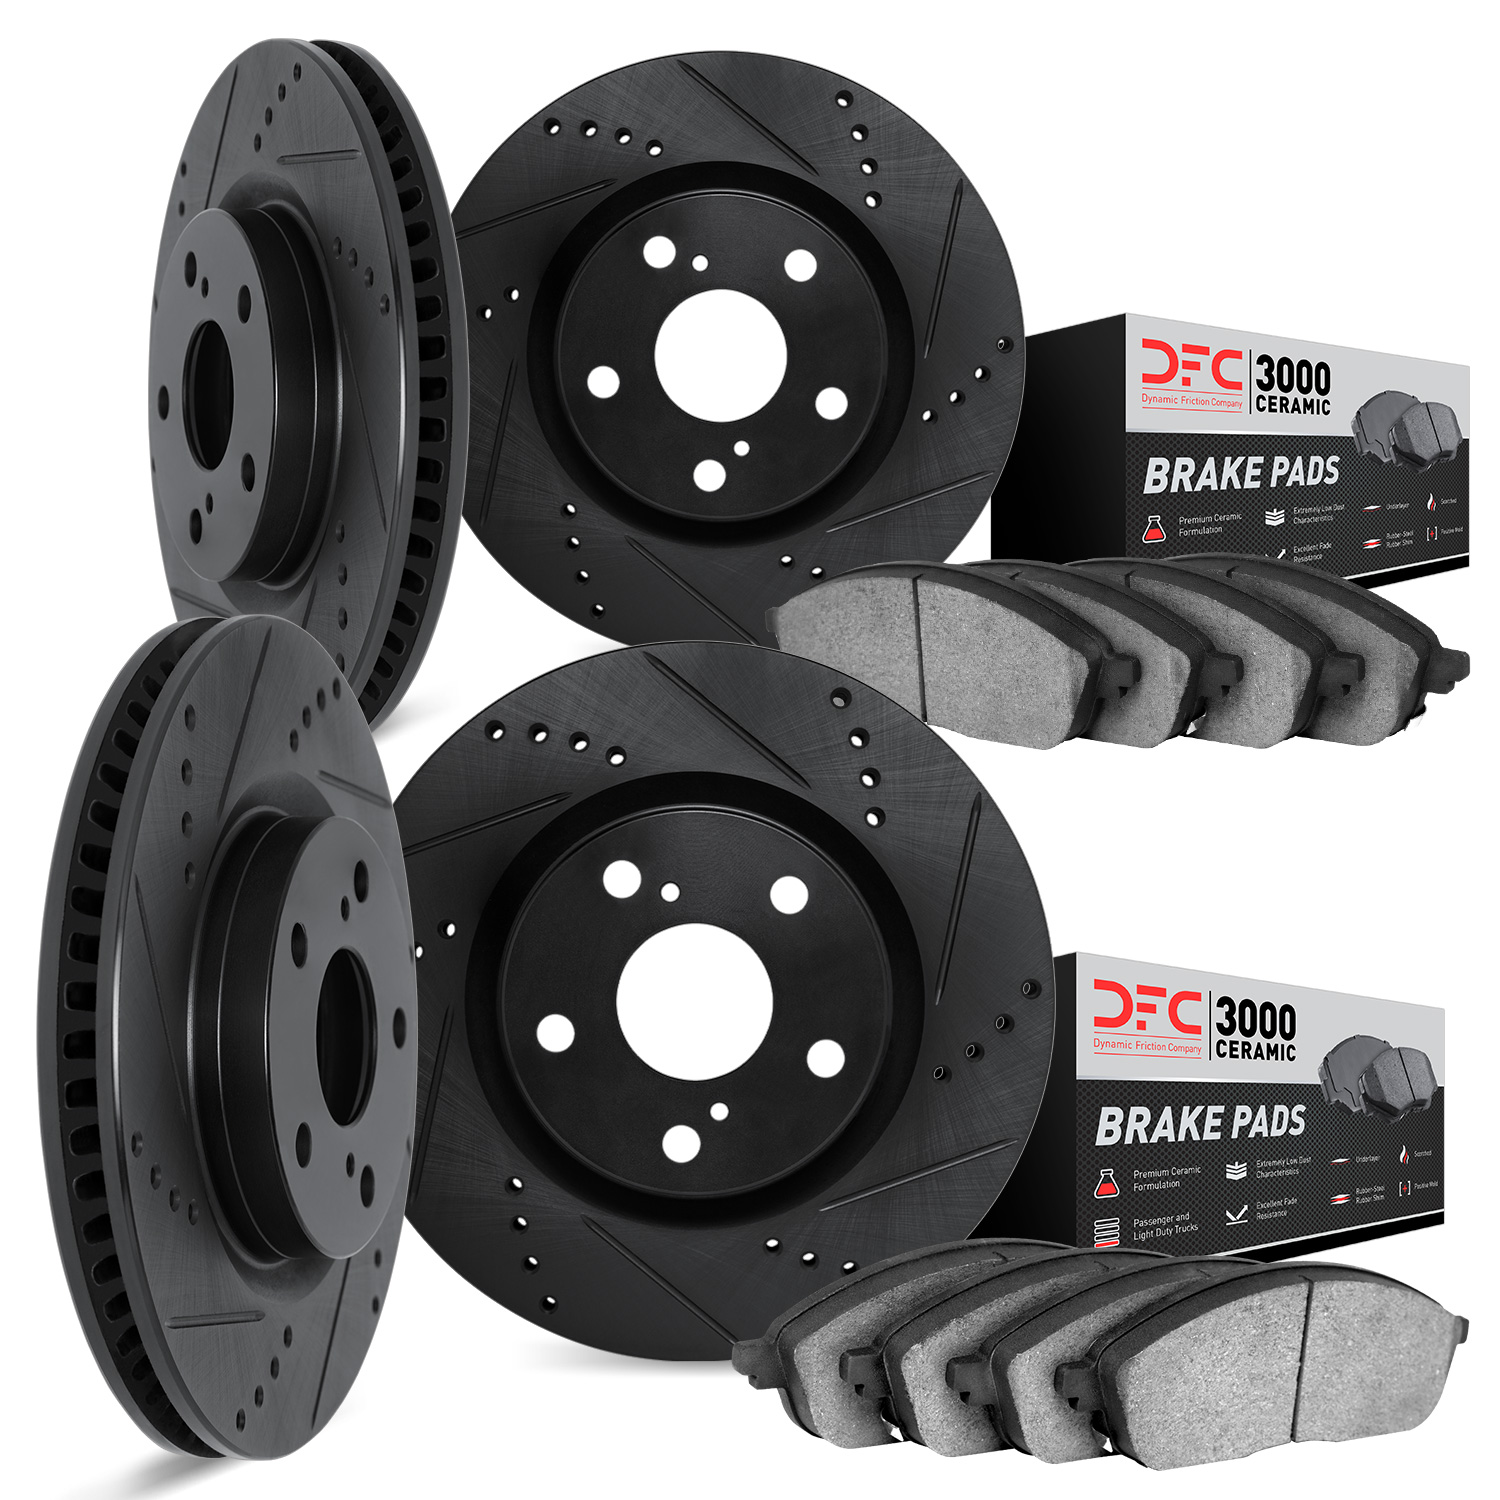 Dimpled/Slotted Brake Rotors with 3000-Series Ceramic Brake Pads